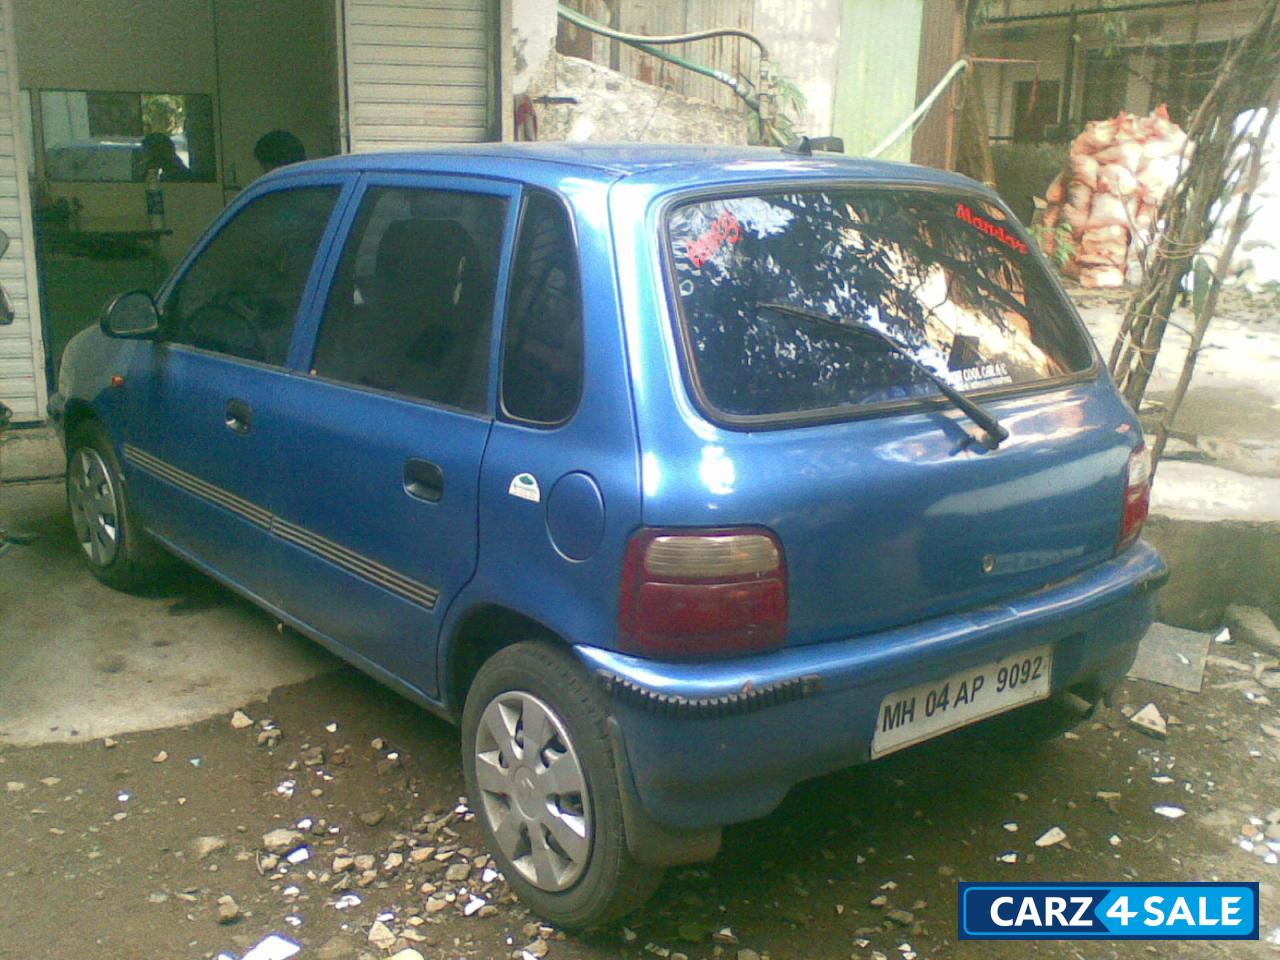 Cyprus Blue Maruti Suzuki Zen Picture 4. Car ID 1232. Car located ...